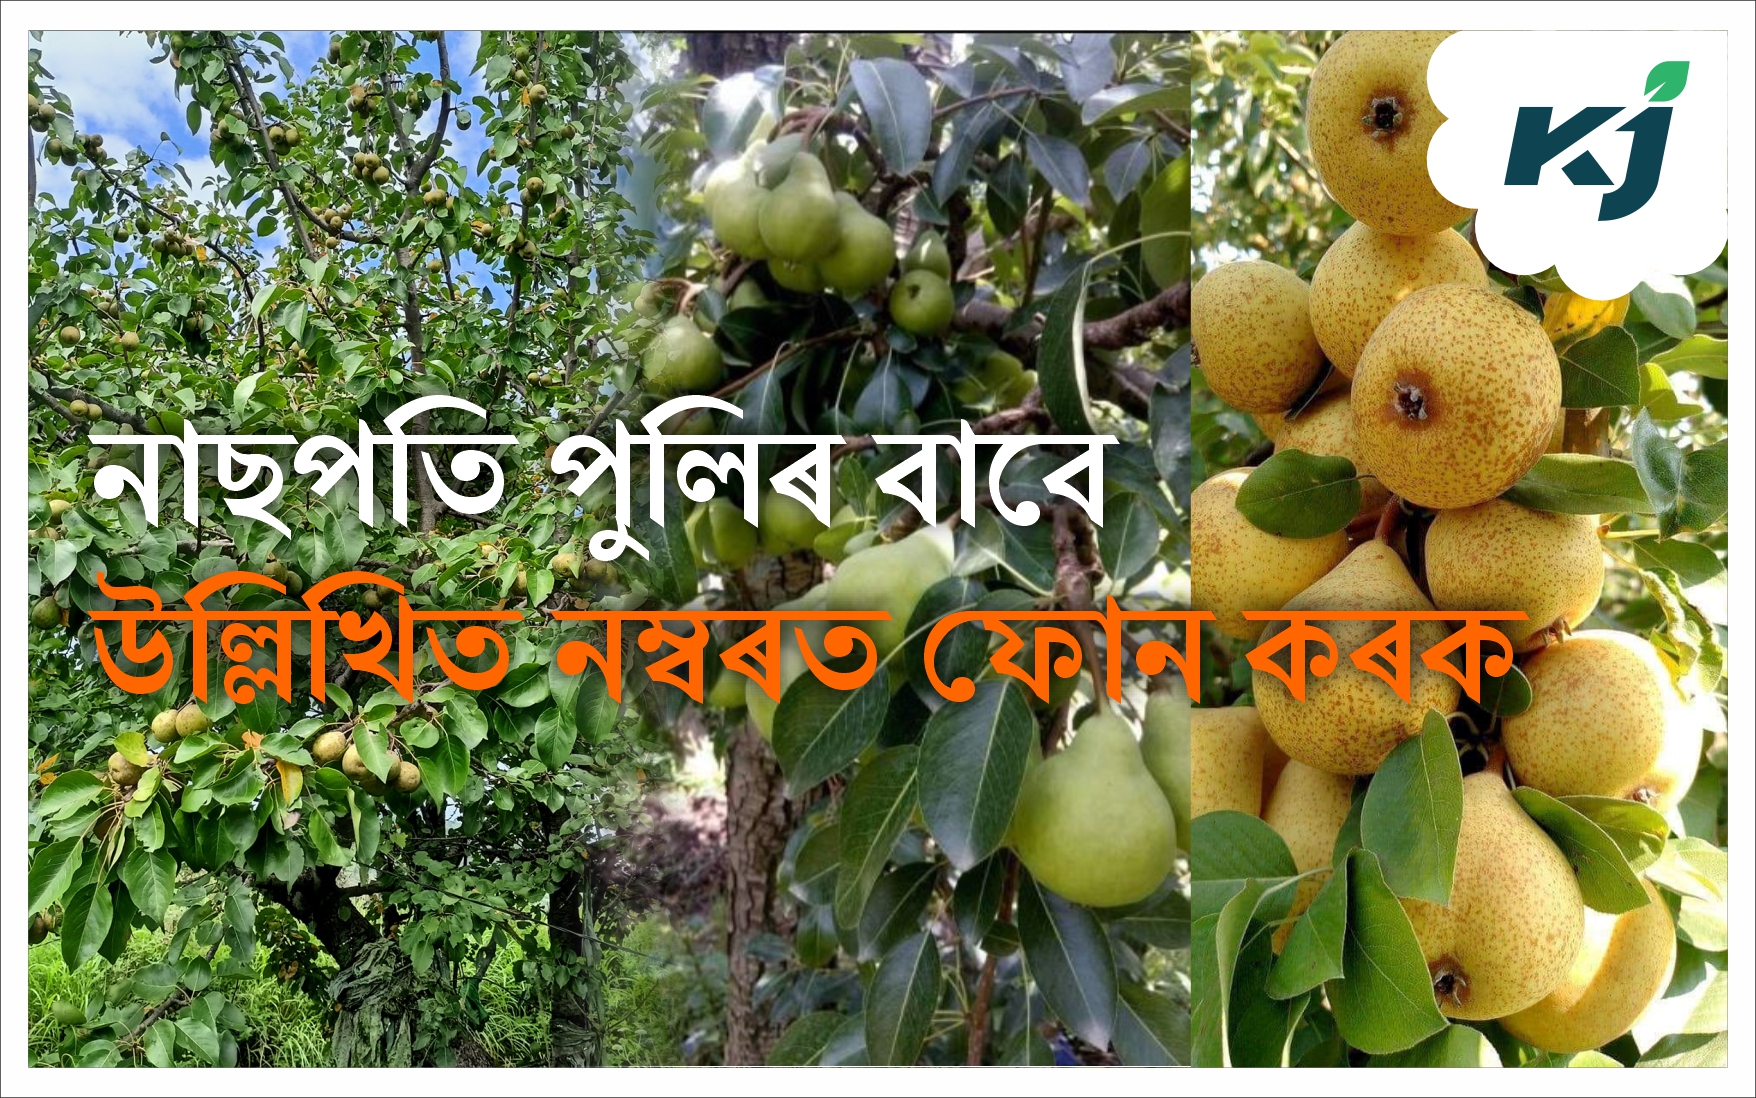 Pear farming & its benefits